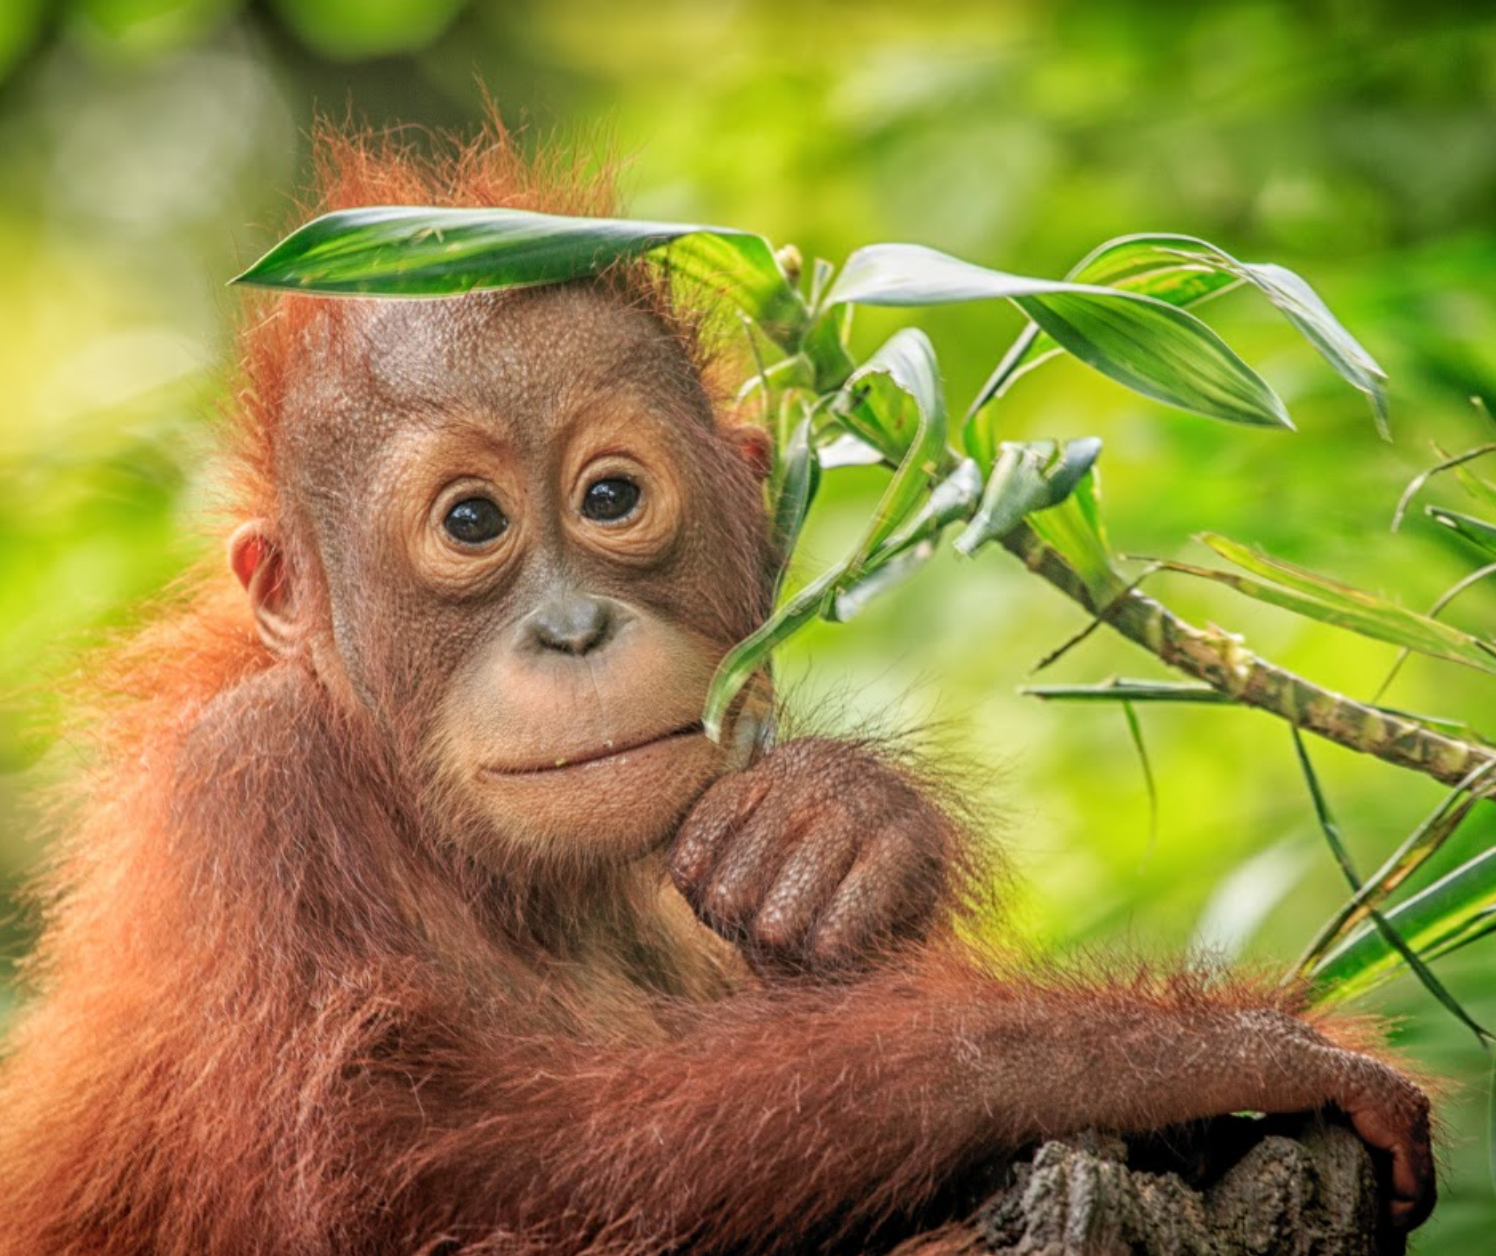 Palm Oil Awareness Month & beyond